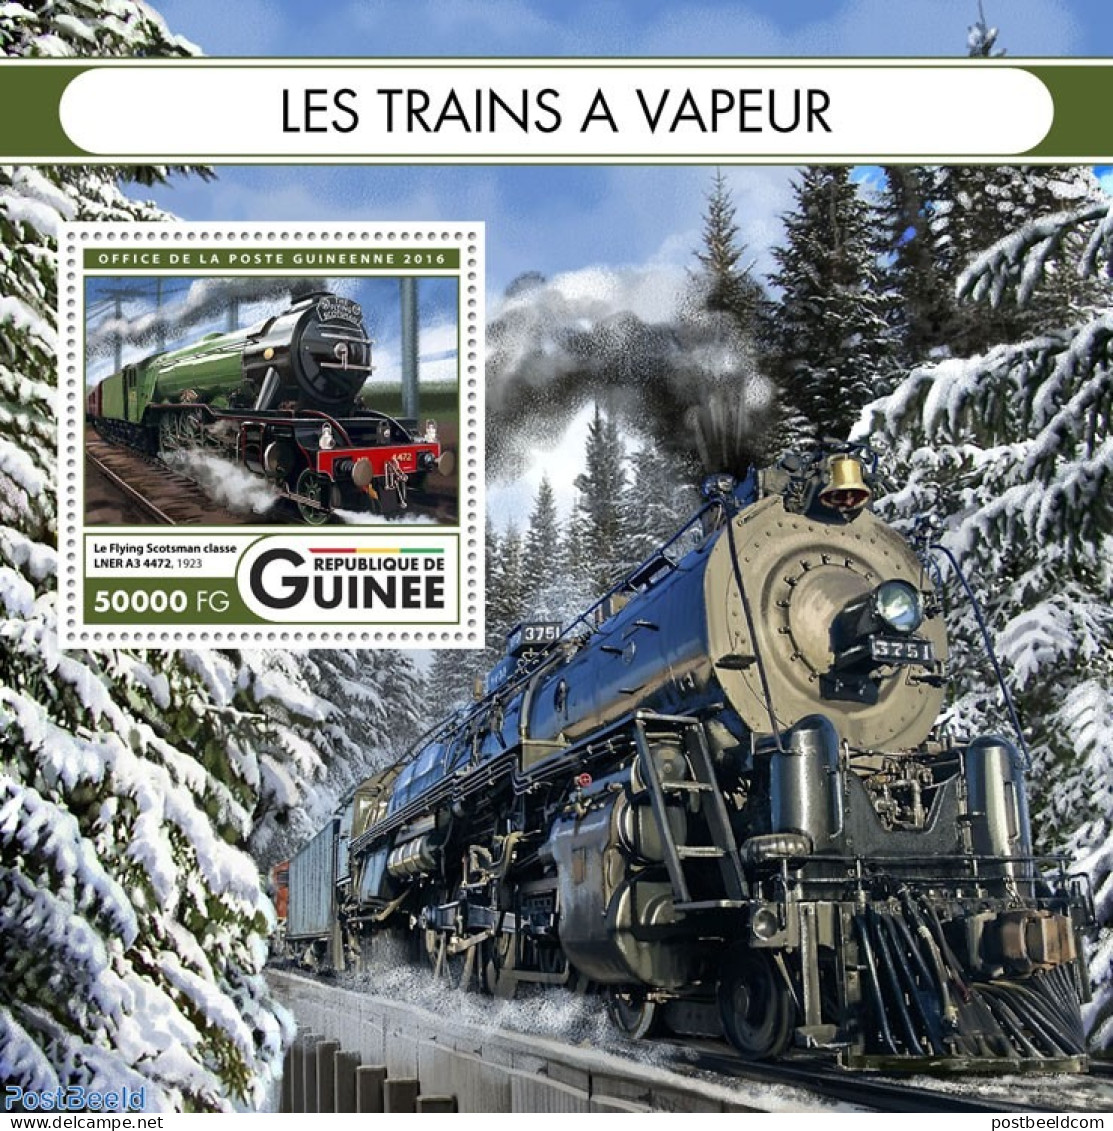 Guinea, Republic 2016 Steam Trains, Mint NH, Transport - Railways - Trains